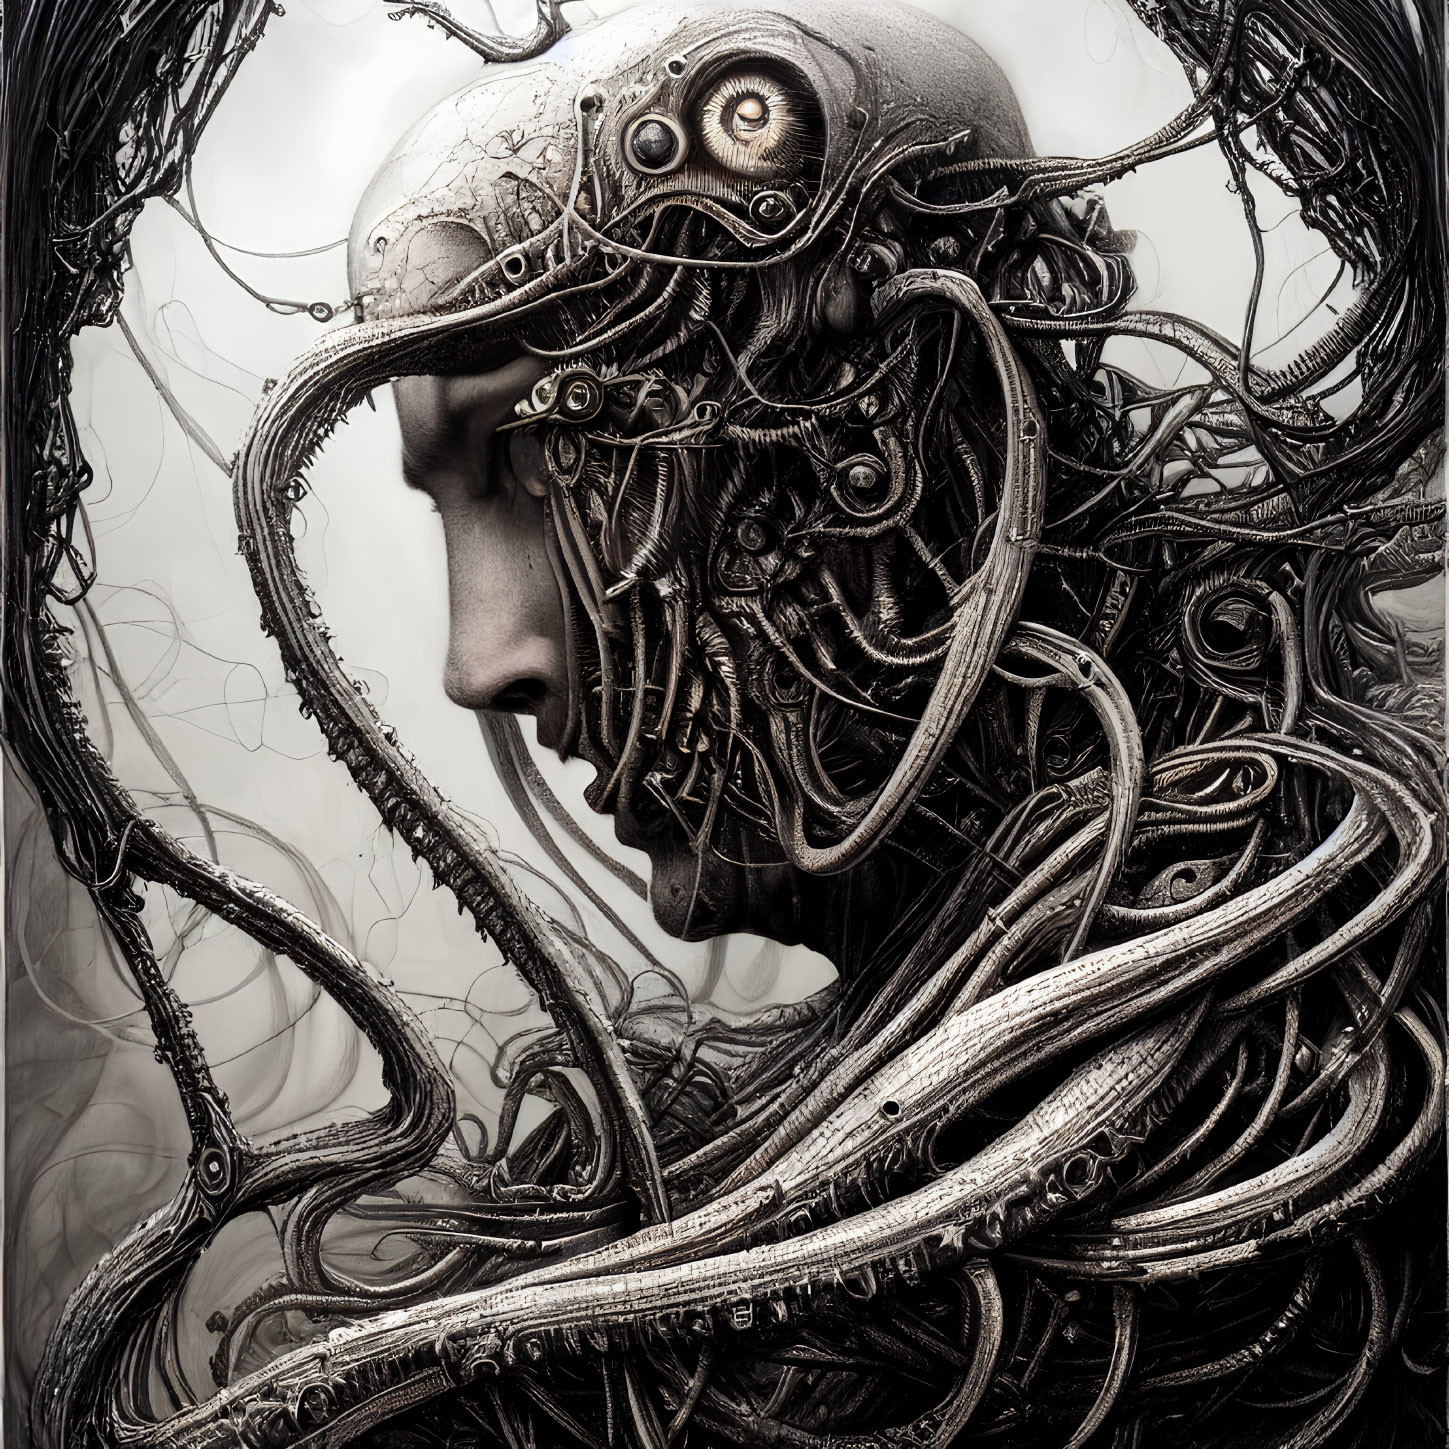 Monochromatic artwork of humanoid figure with intricate mechanical and organic headpiece